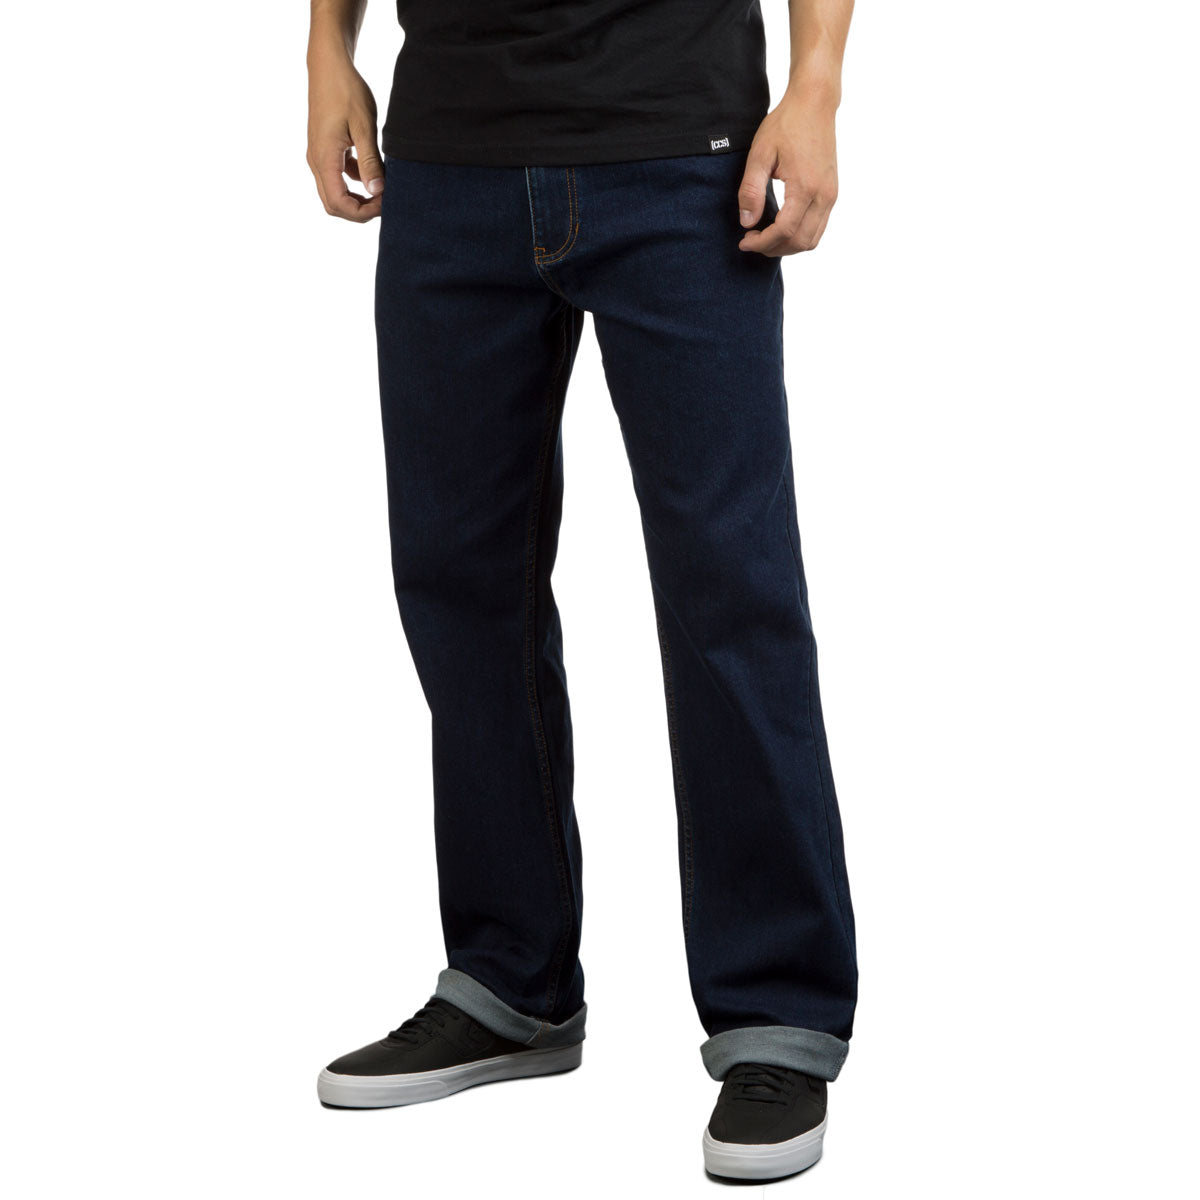 CCS Standard Plus Straight Denim Jeans - Indigo image 4